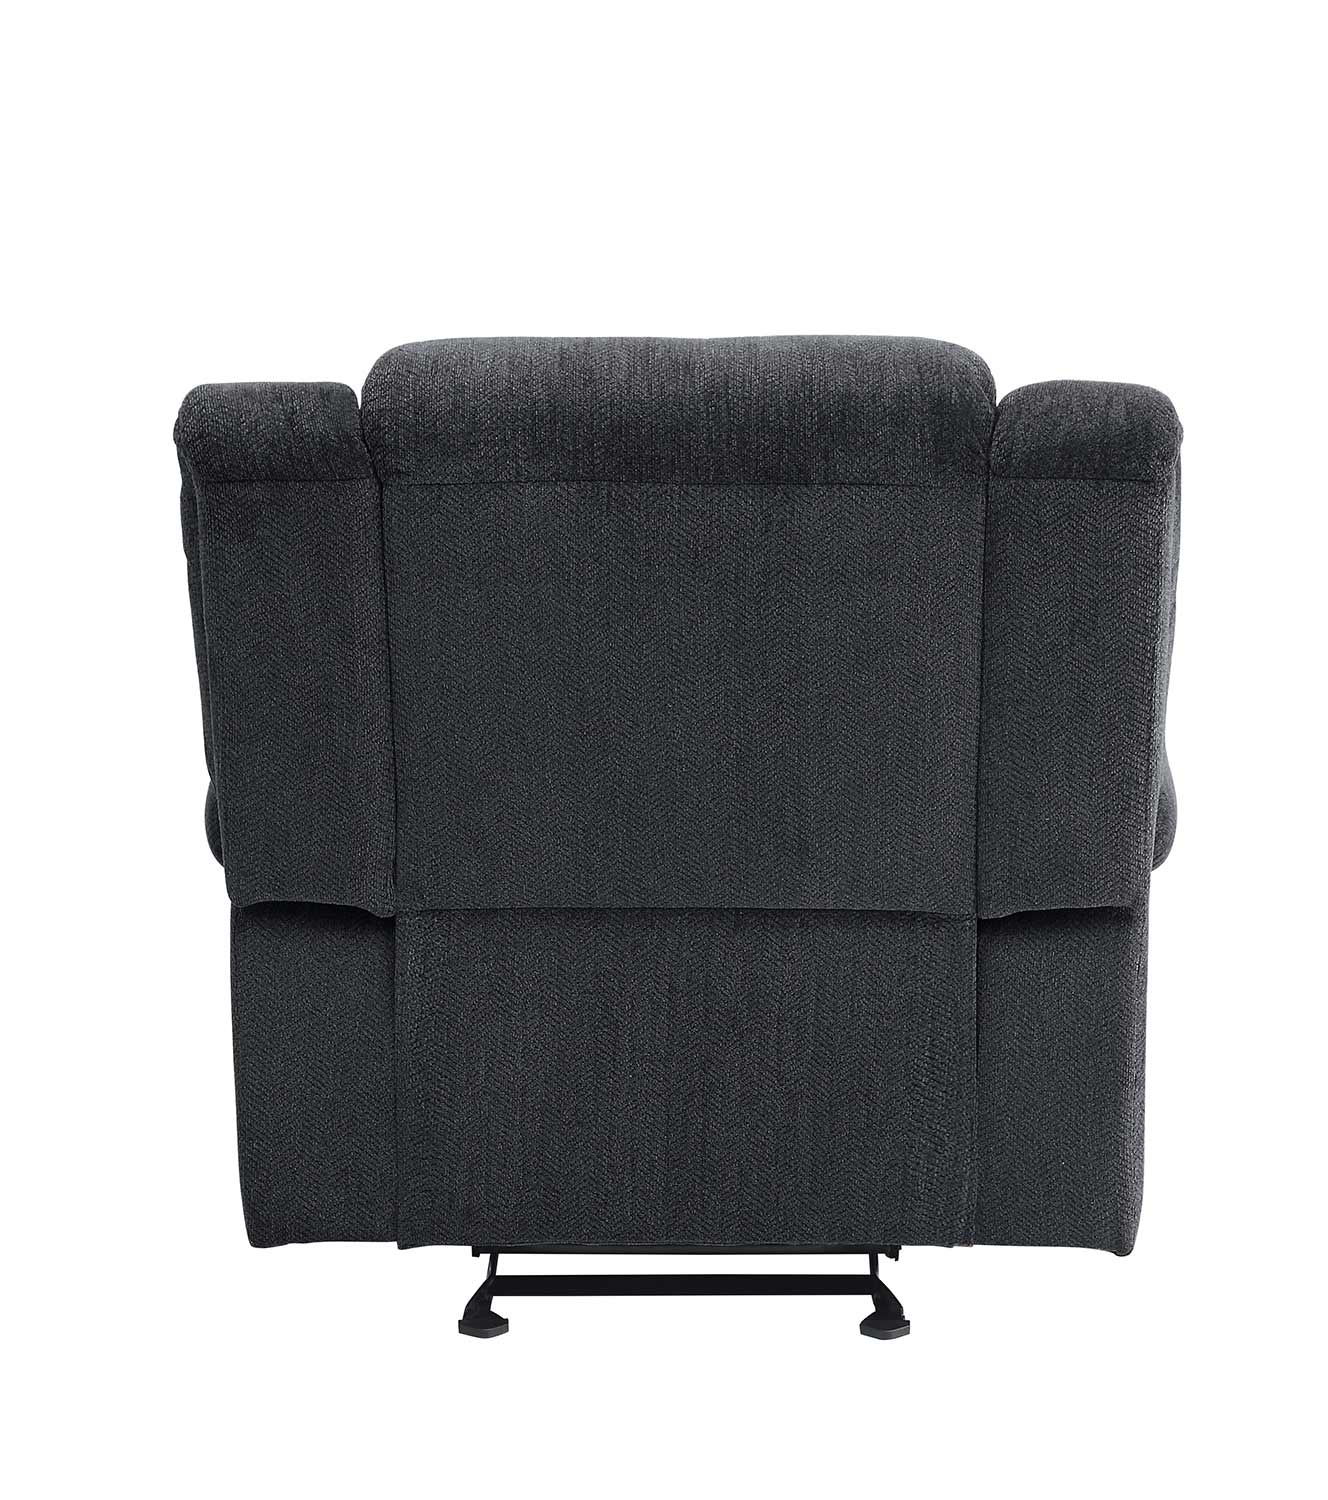 Homelegance Nutmeg Glider Reclining Chair - Charcoal Gray